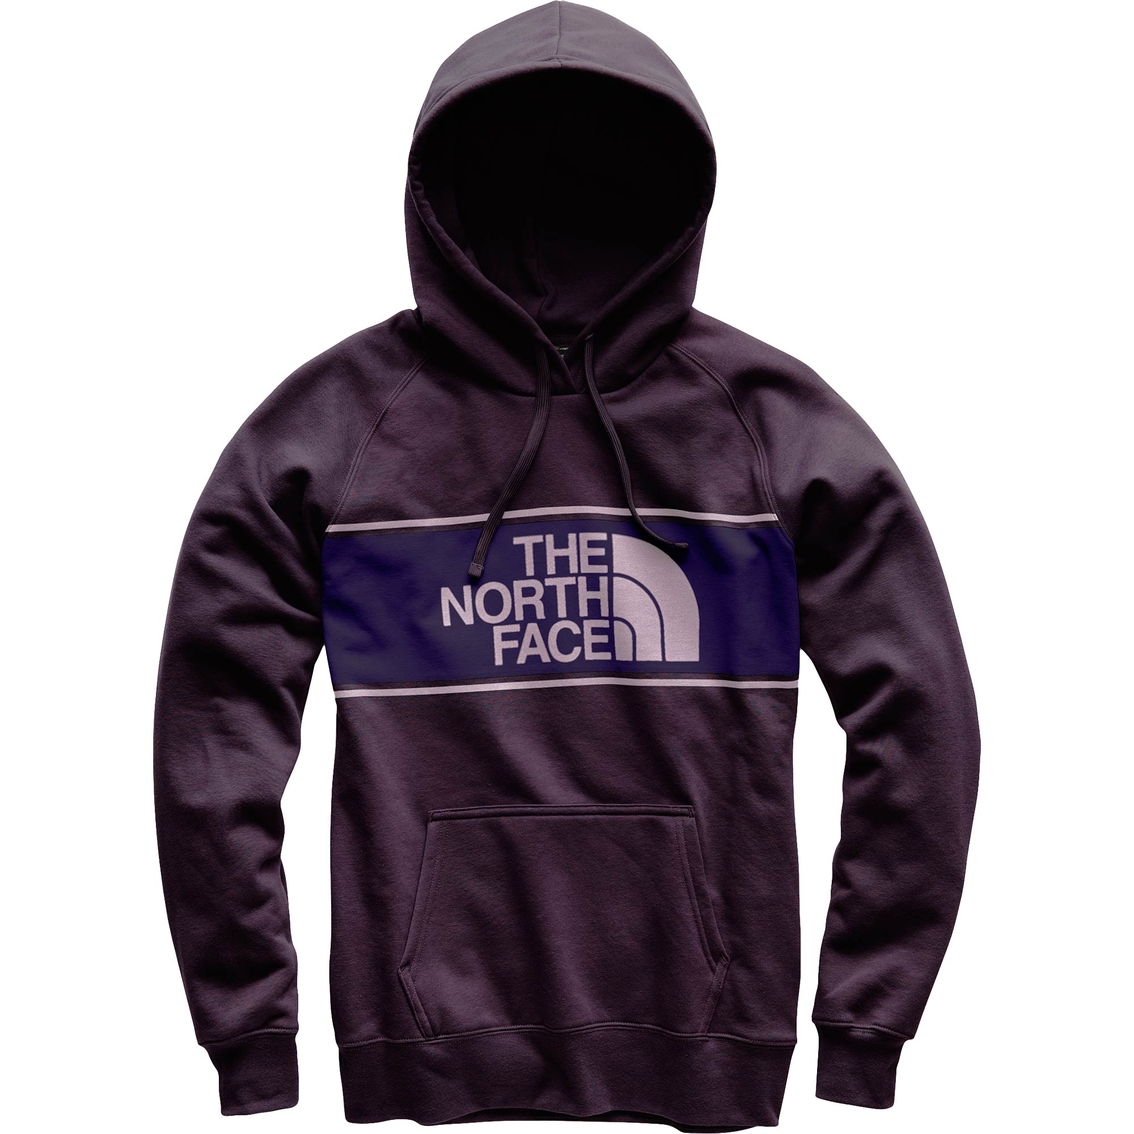 The North Face Edge To Edge Pullover Hoodie | Hoodies & Sweatshirts ...